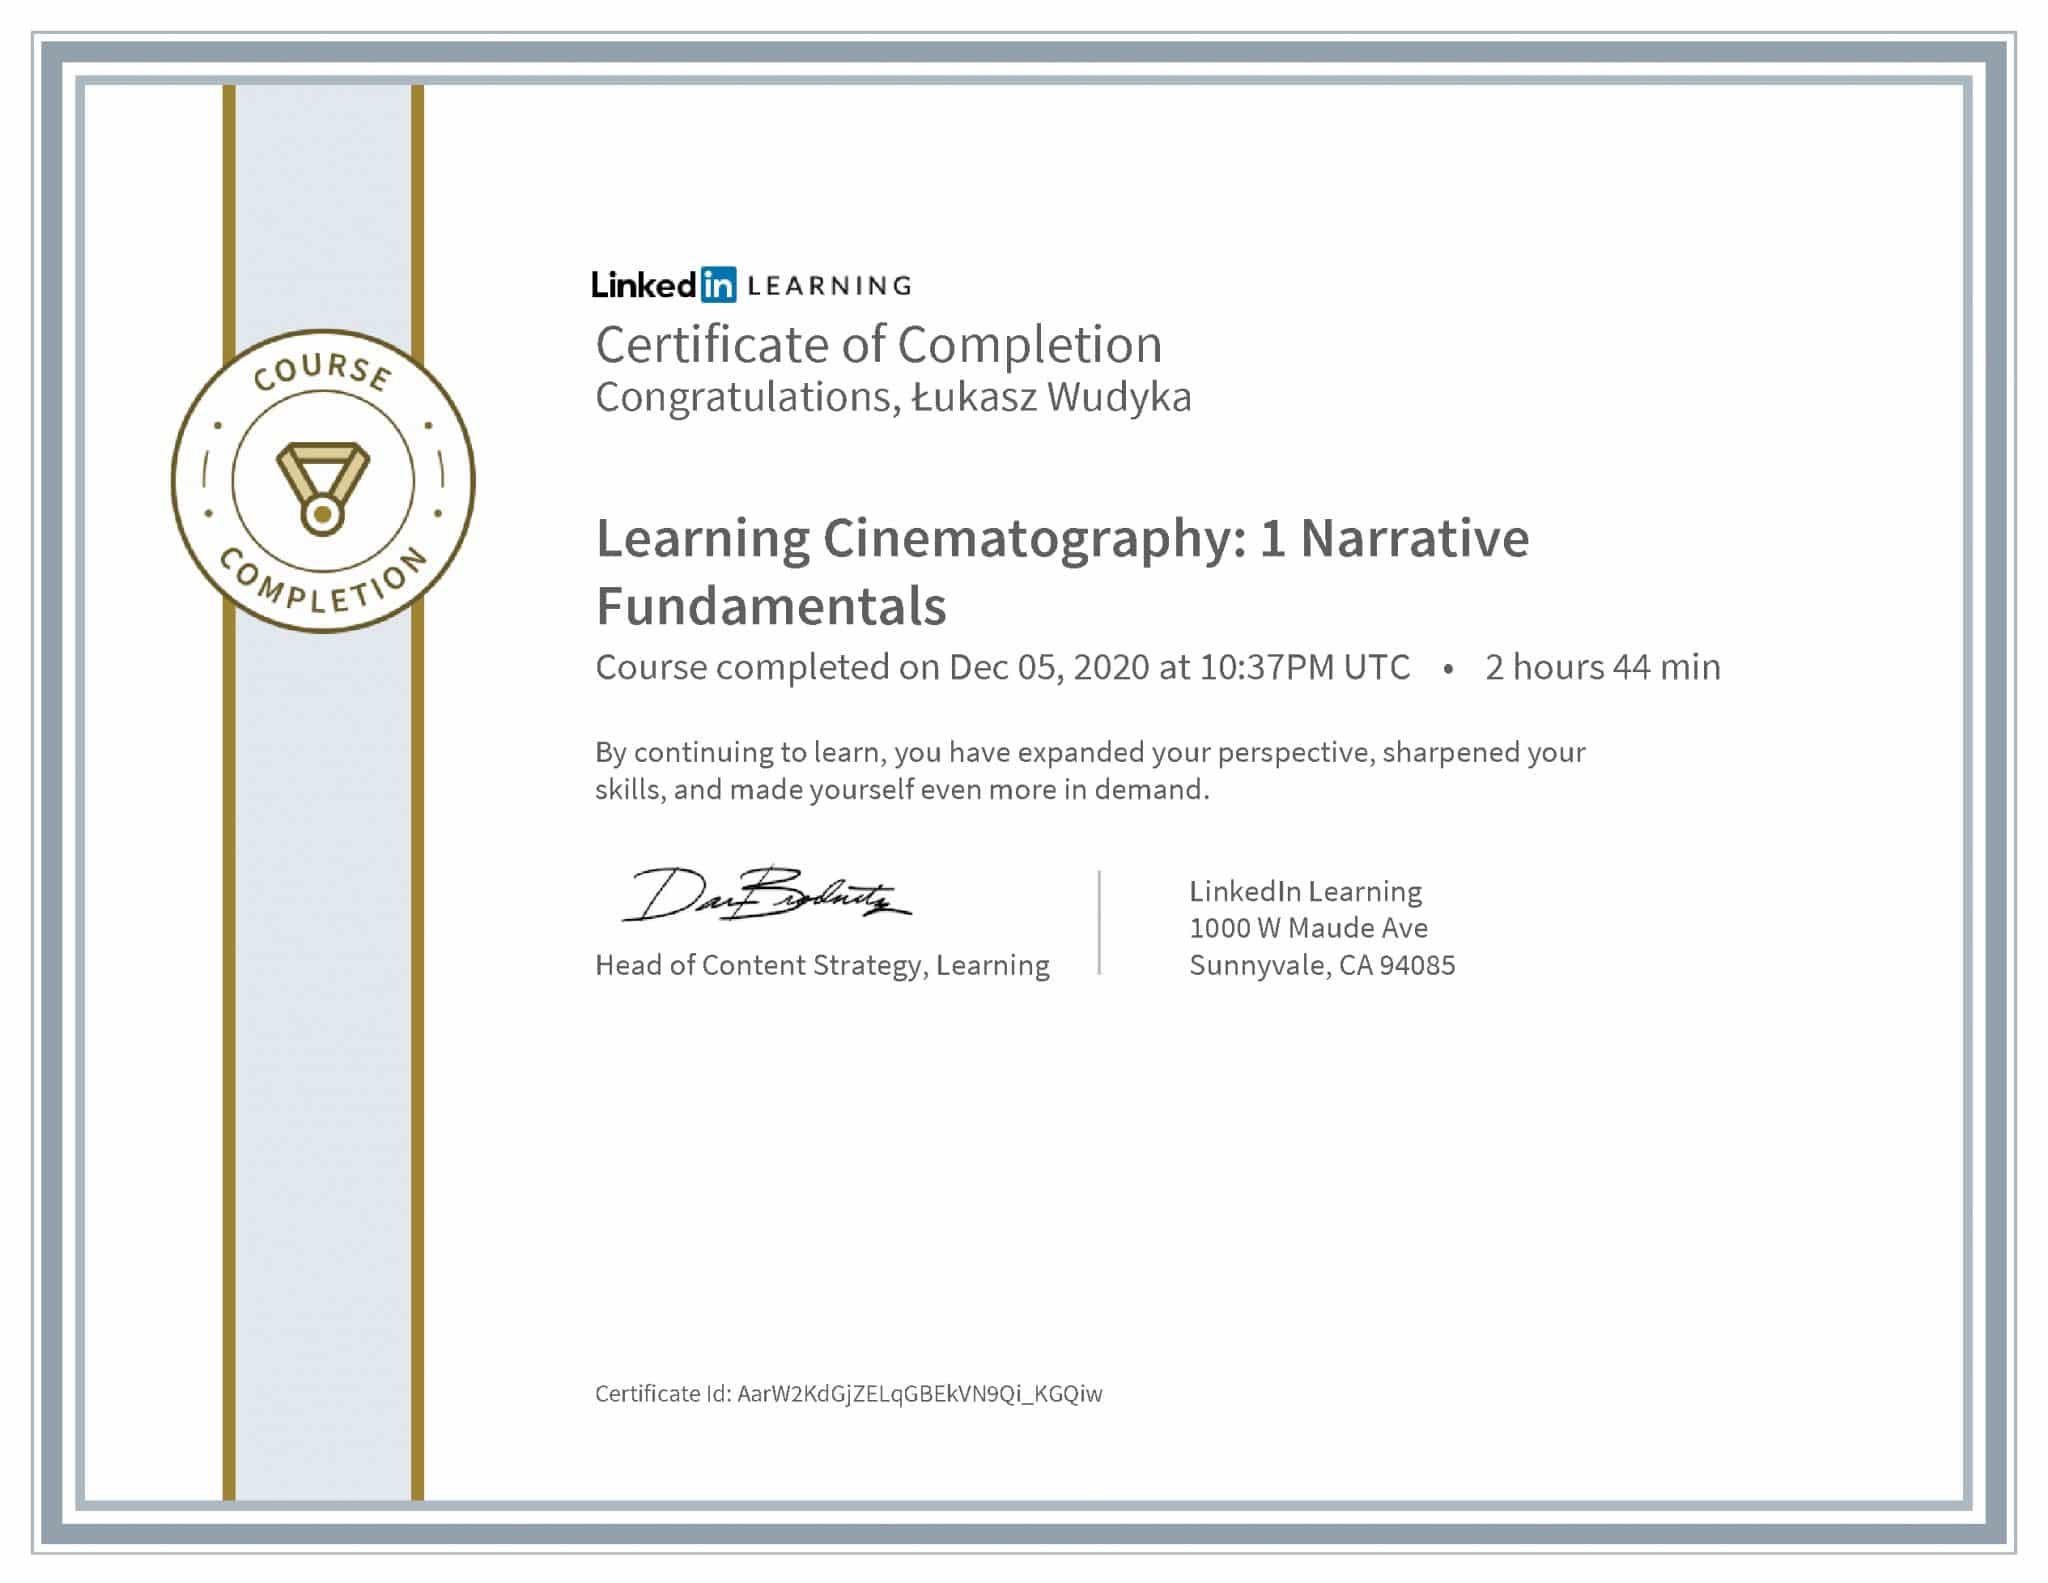 Łukasz Wudyka certyfikat LinkedIn Learning Cinematography: 1 Narrative Fundamentals